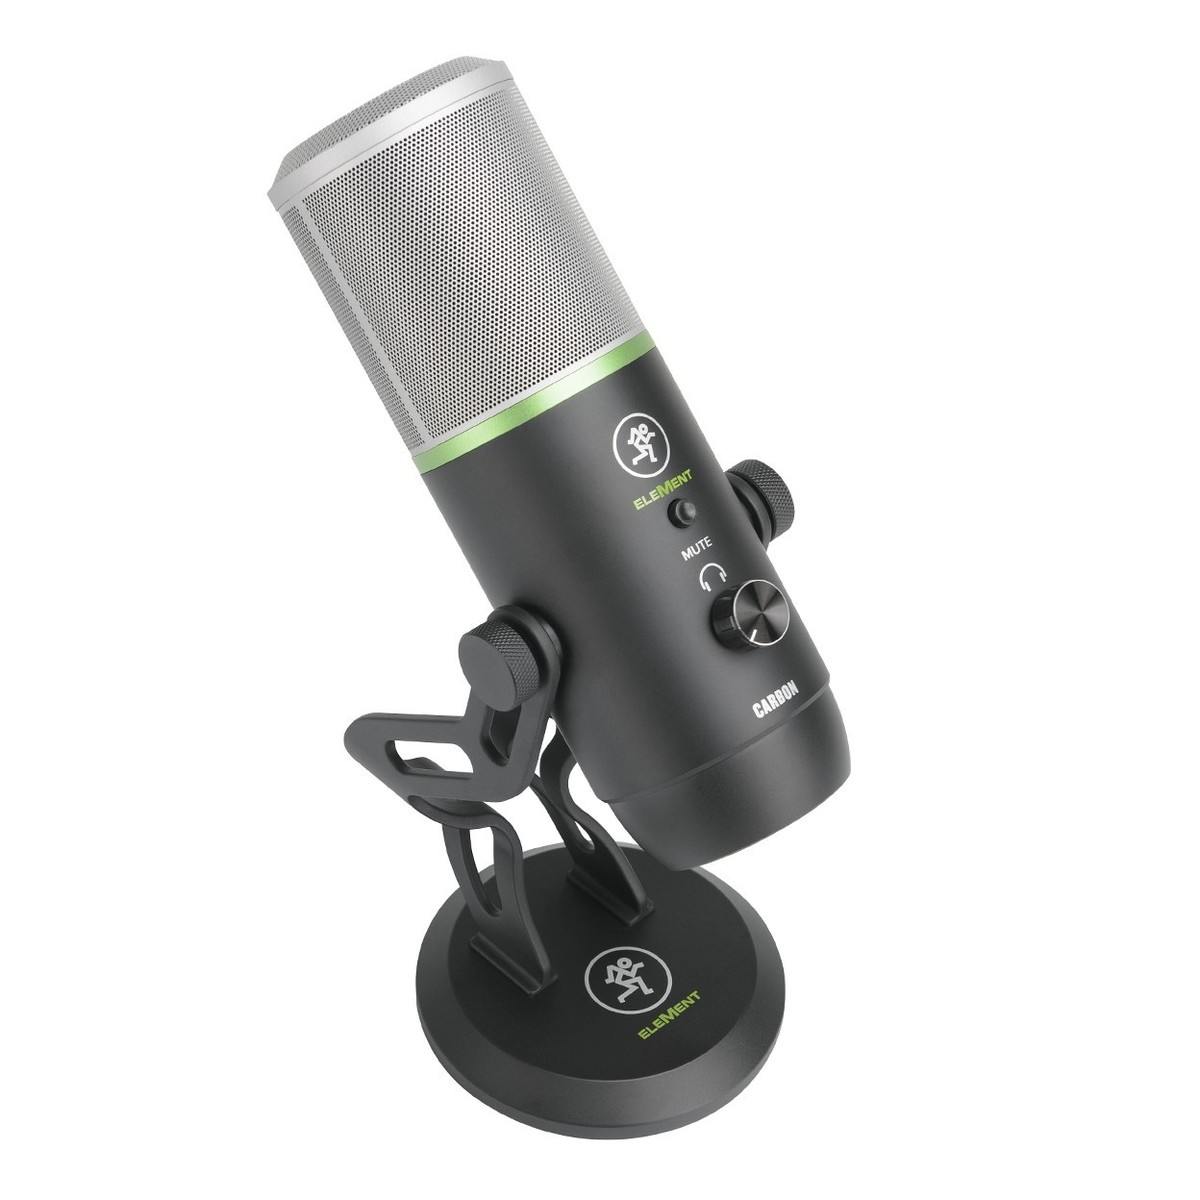 Mackie Carbon Premium USB Microphone - DY Pro Audio